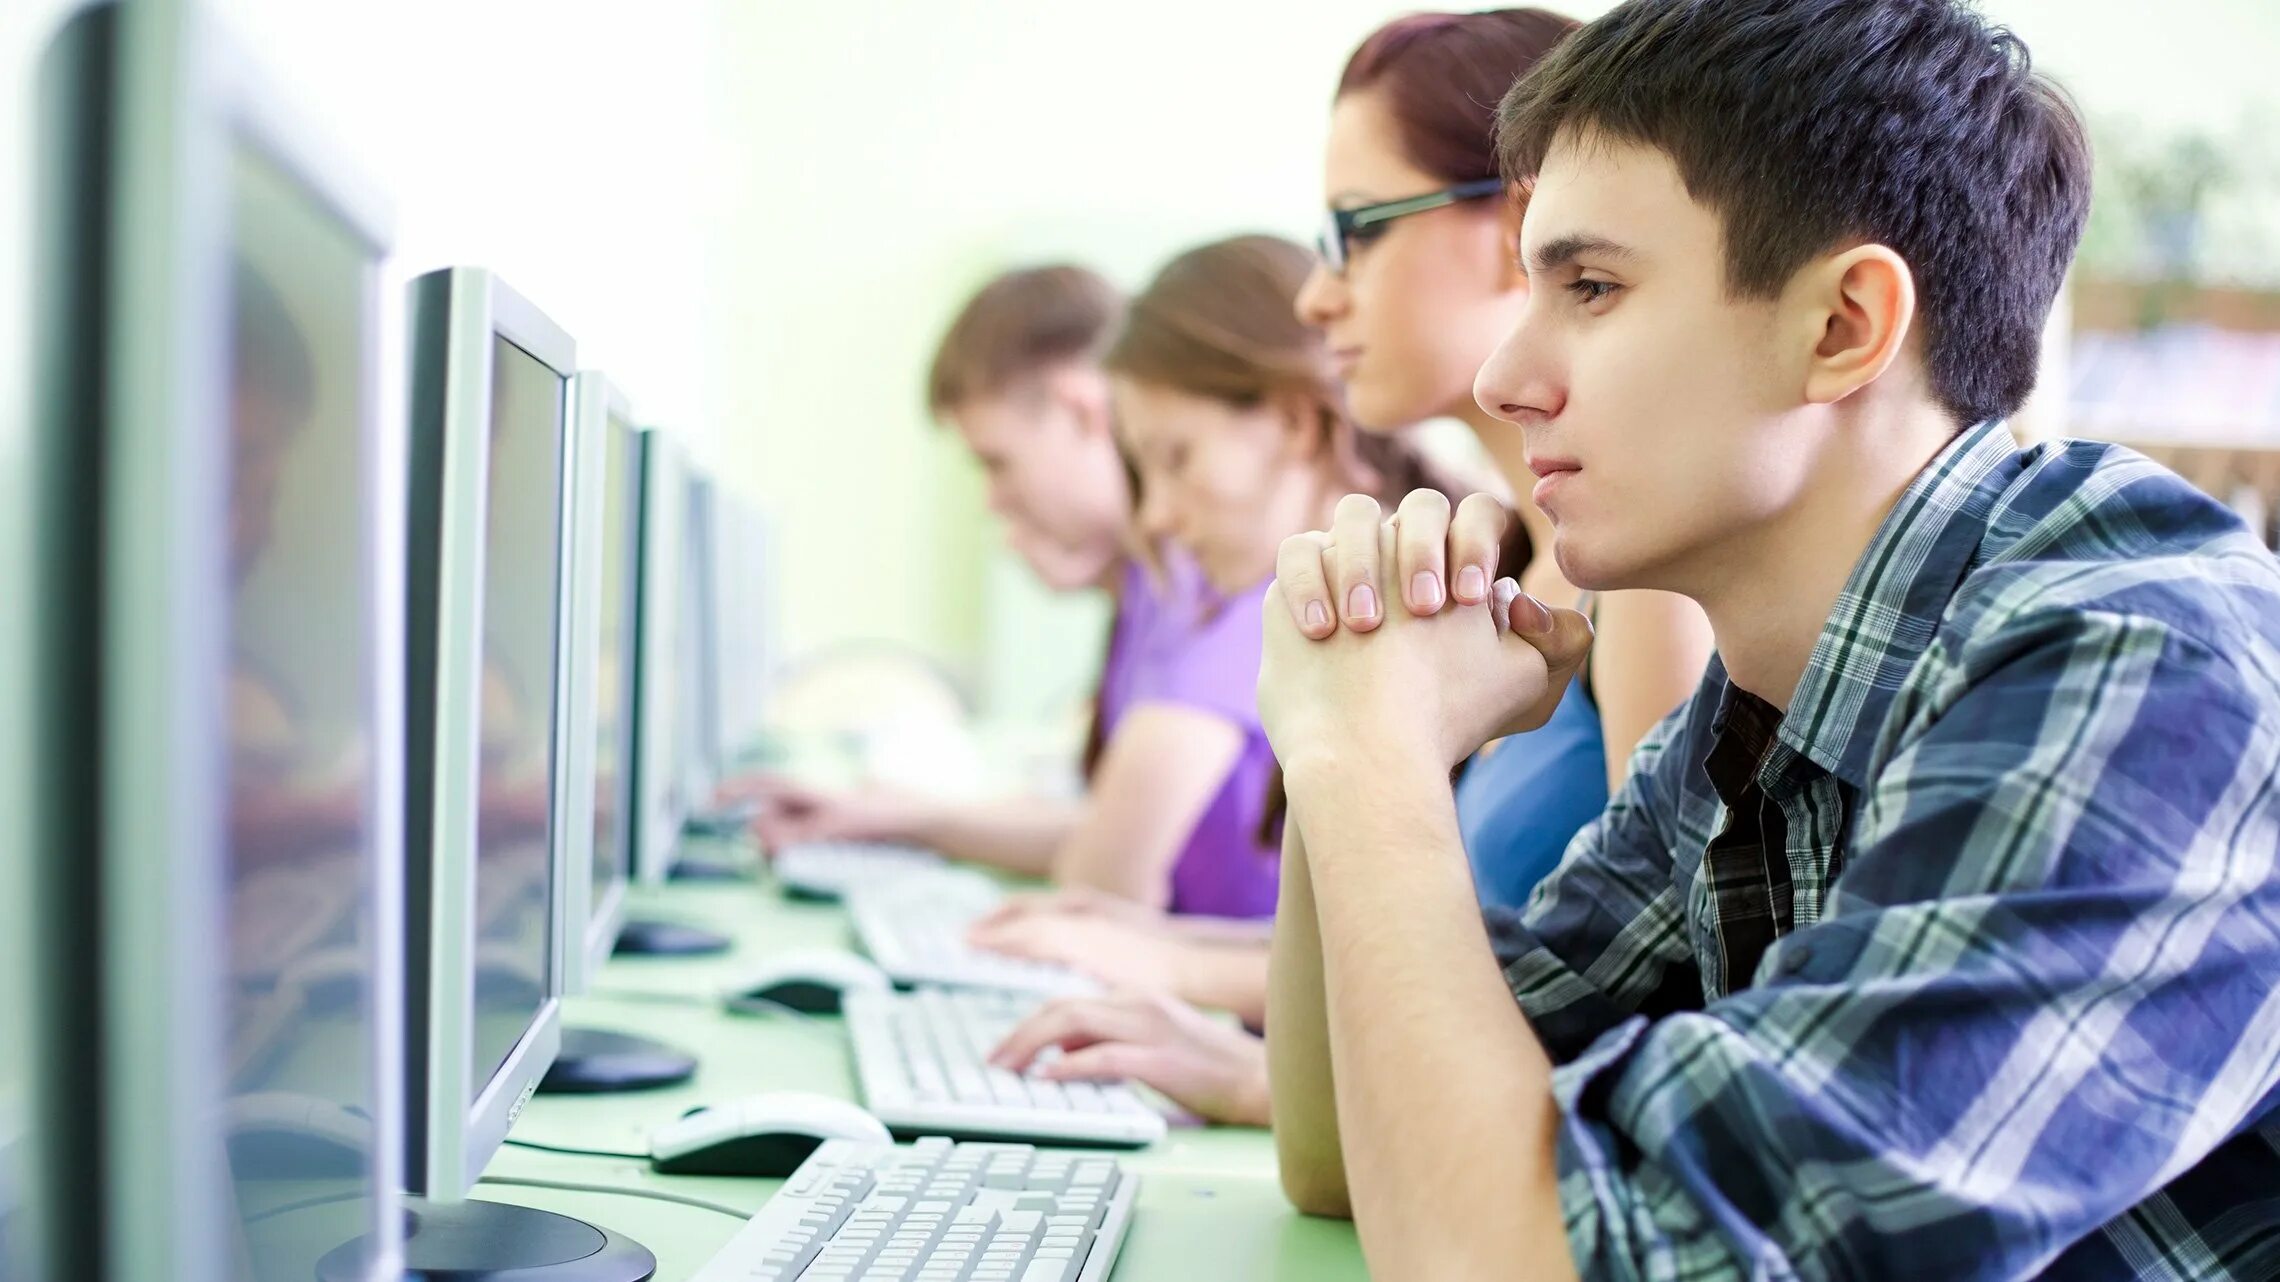 Подросток за компьютером. Подросток и компьютер. Ученик за компьютером. Школьники за компьютеро. Какие из предложенных курсов